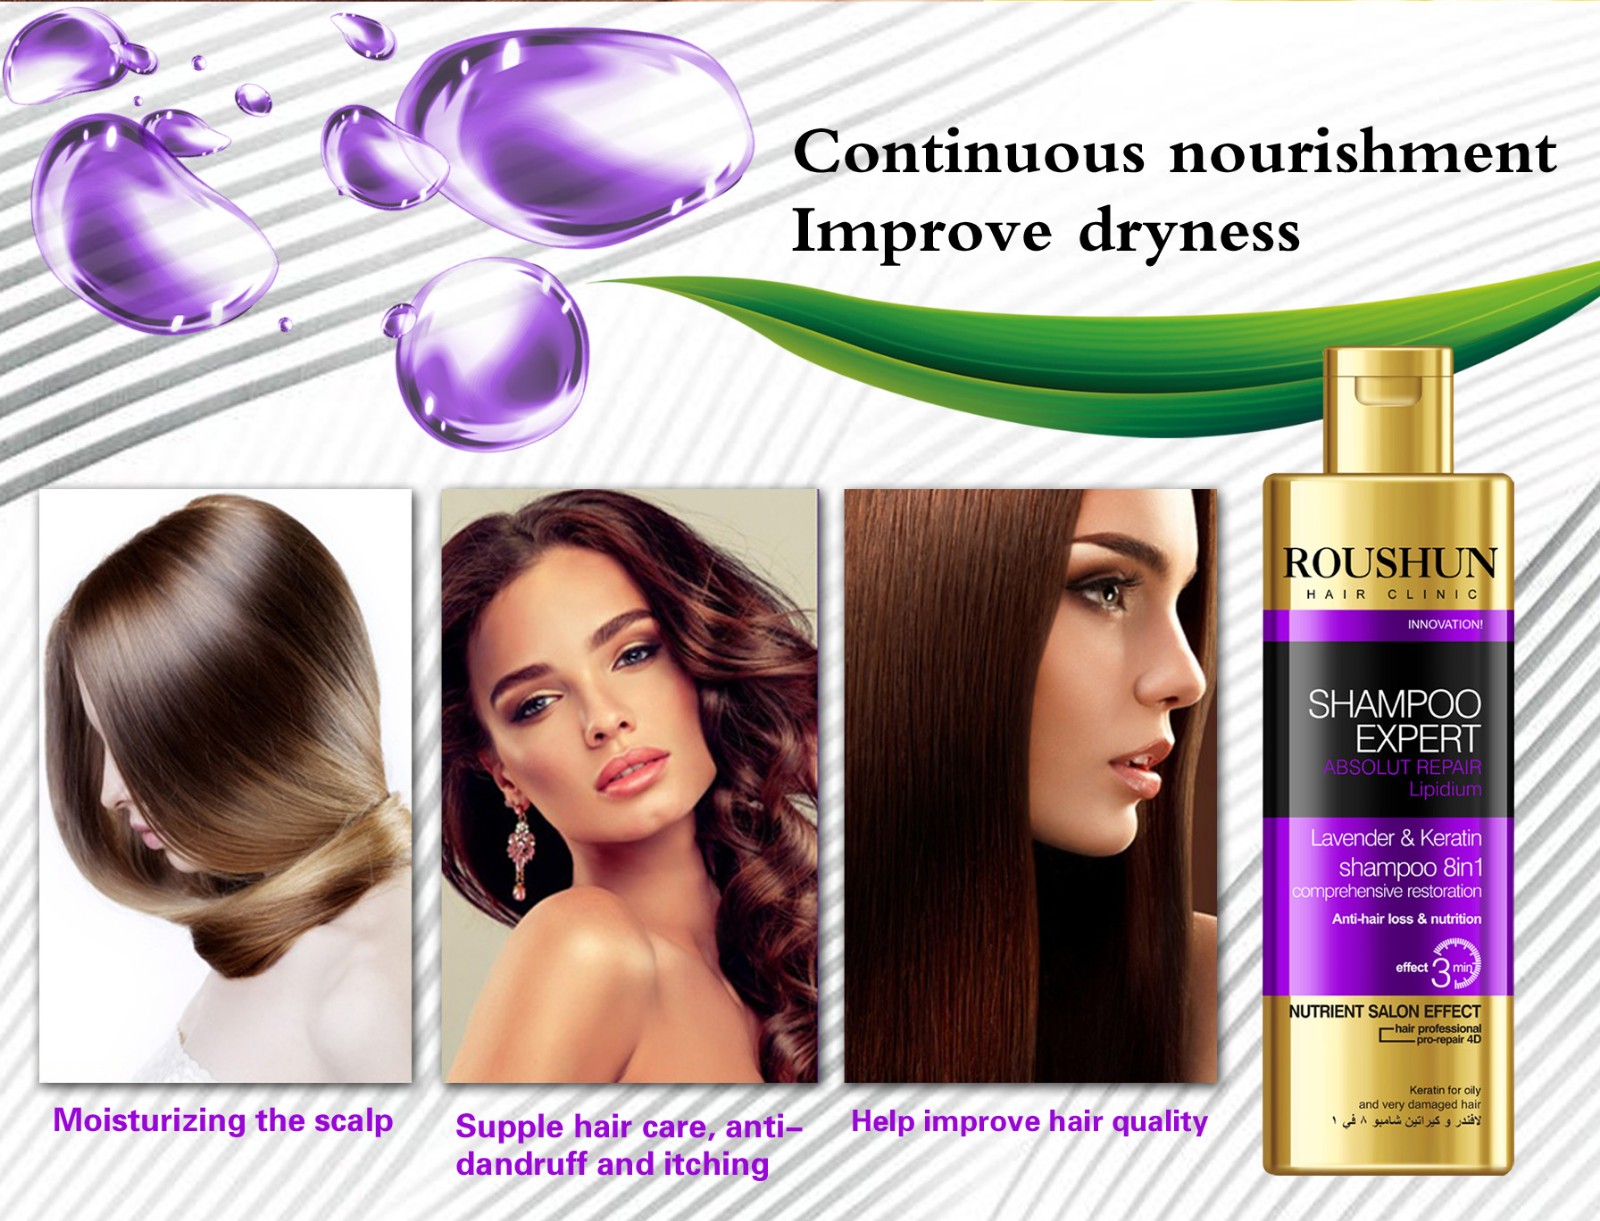 Lavender&Keratin shampoo